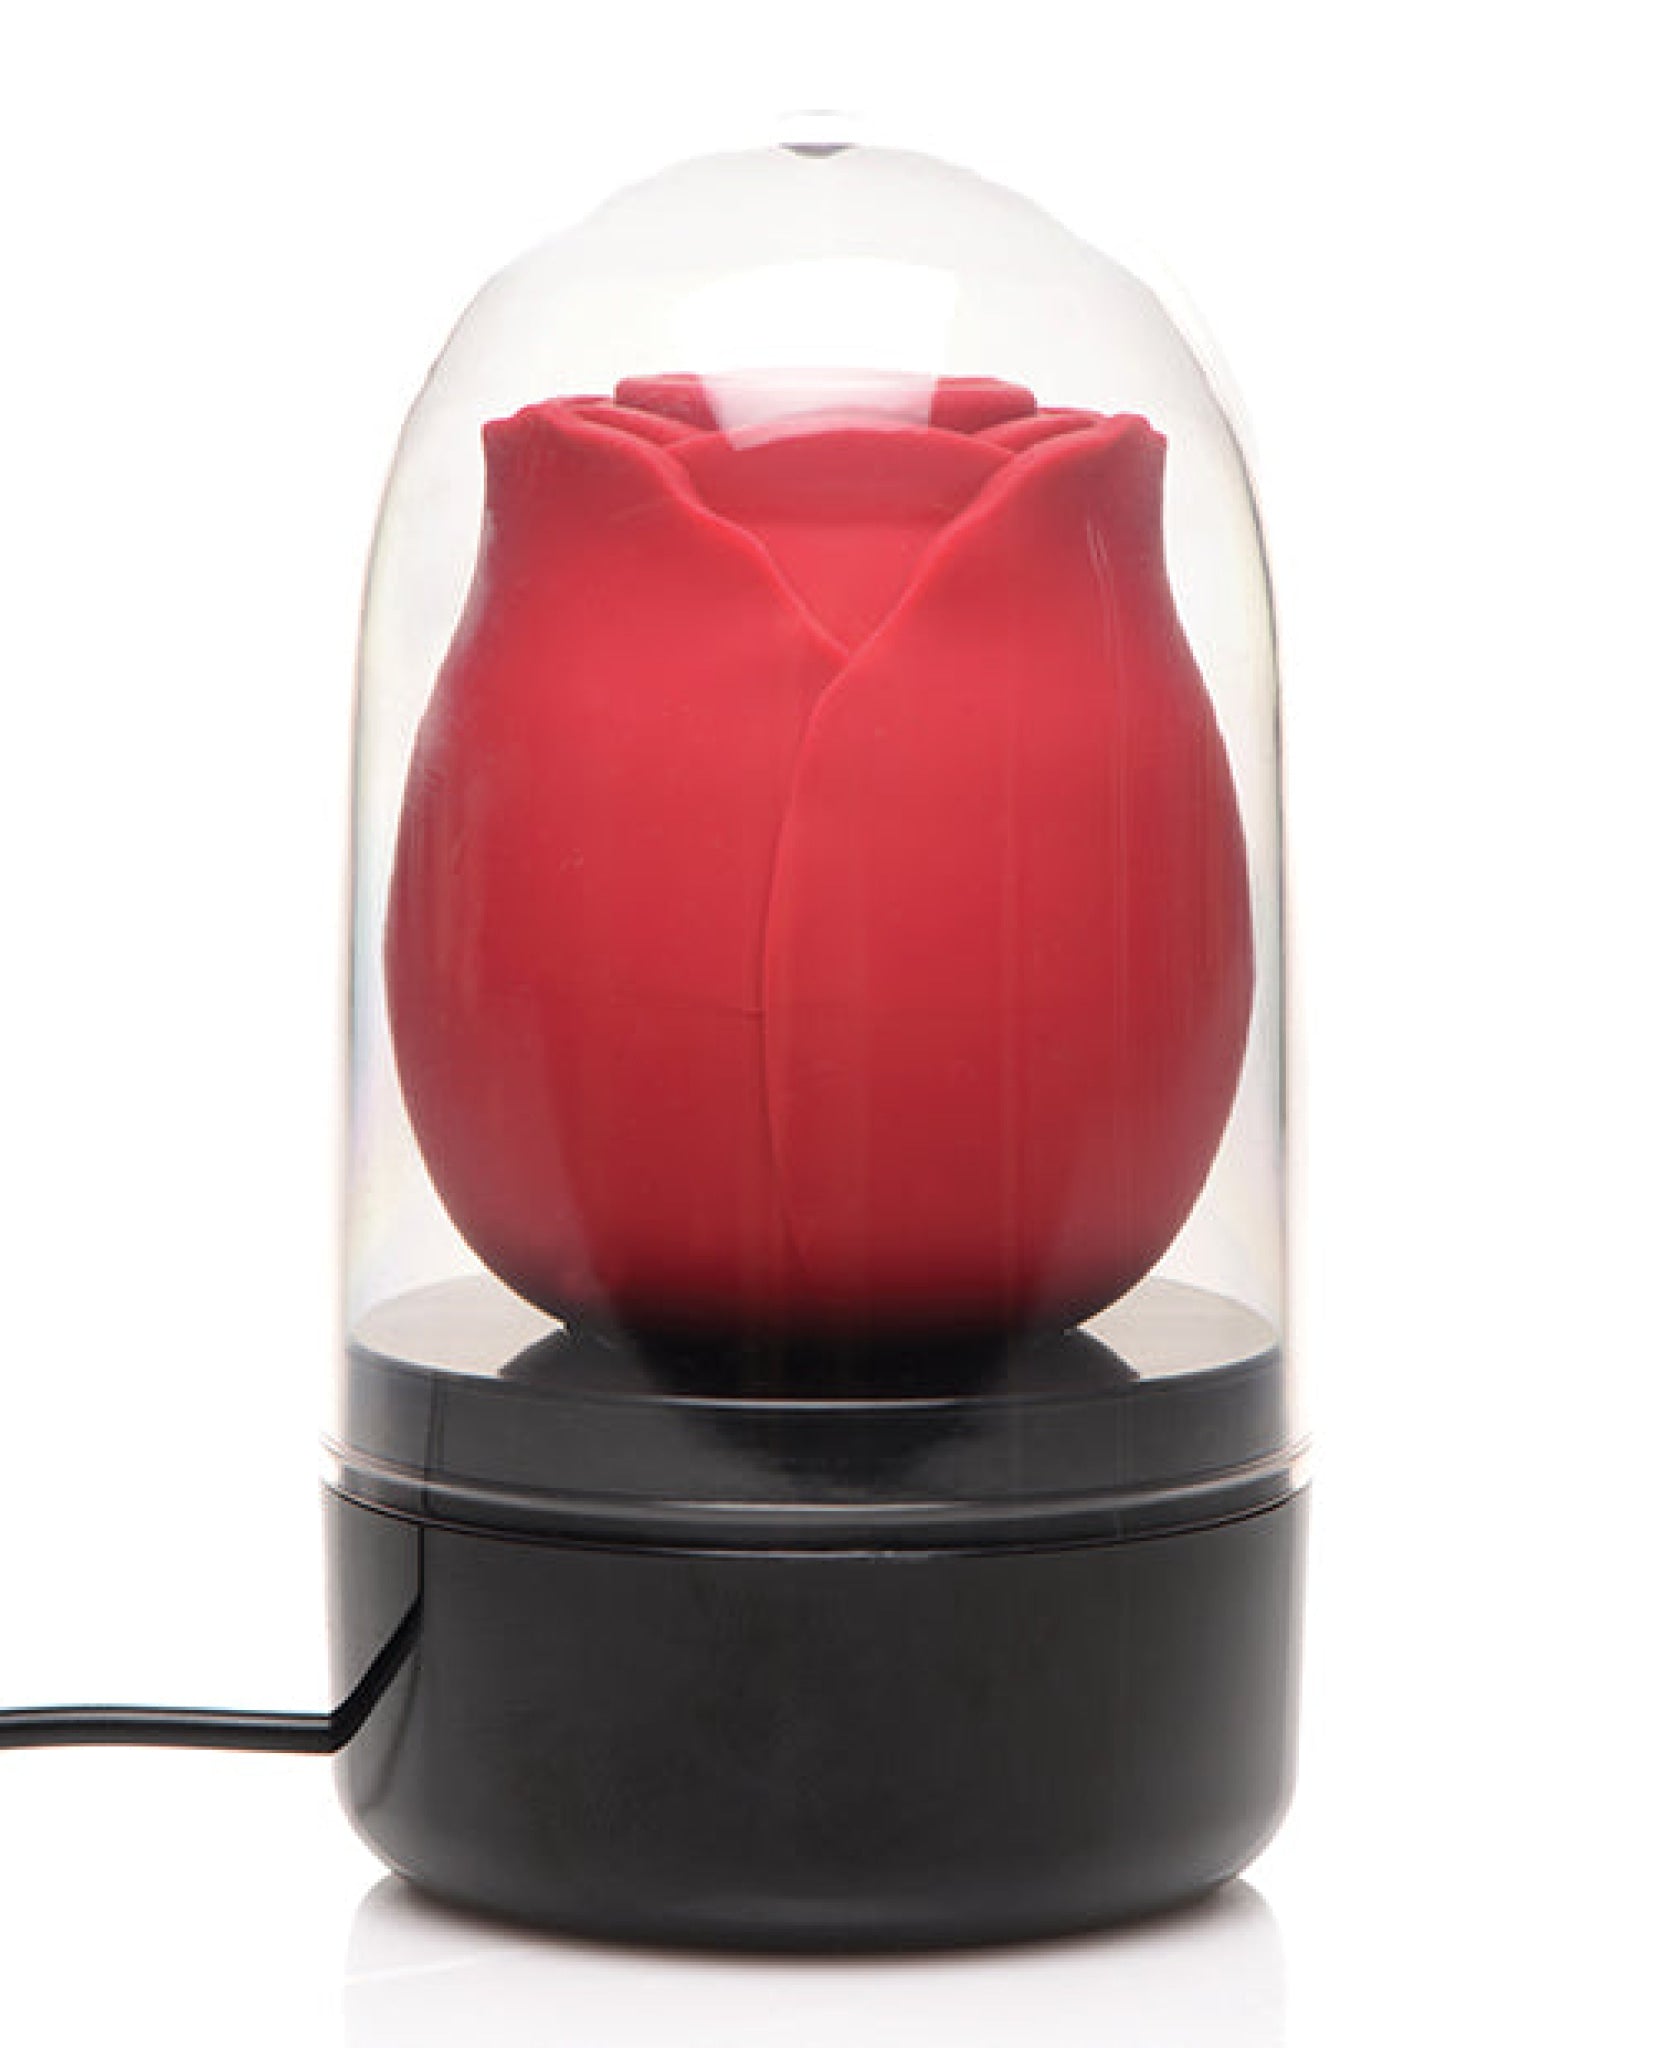 Inmi Bloomgasm Wild Rose 10x Stimulator W-case - Red Inmi